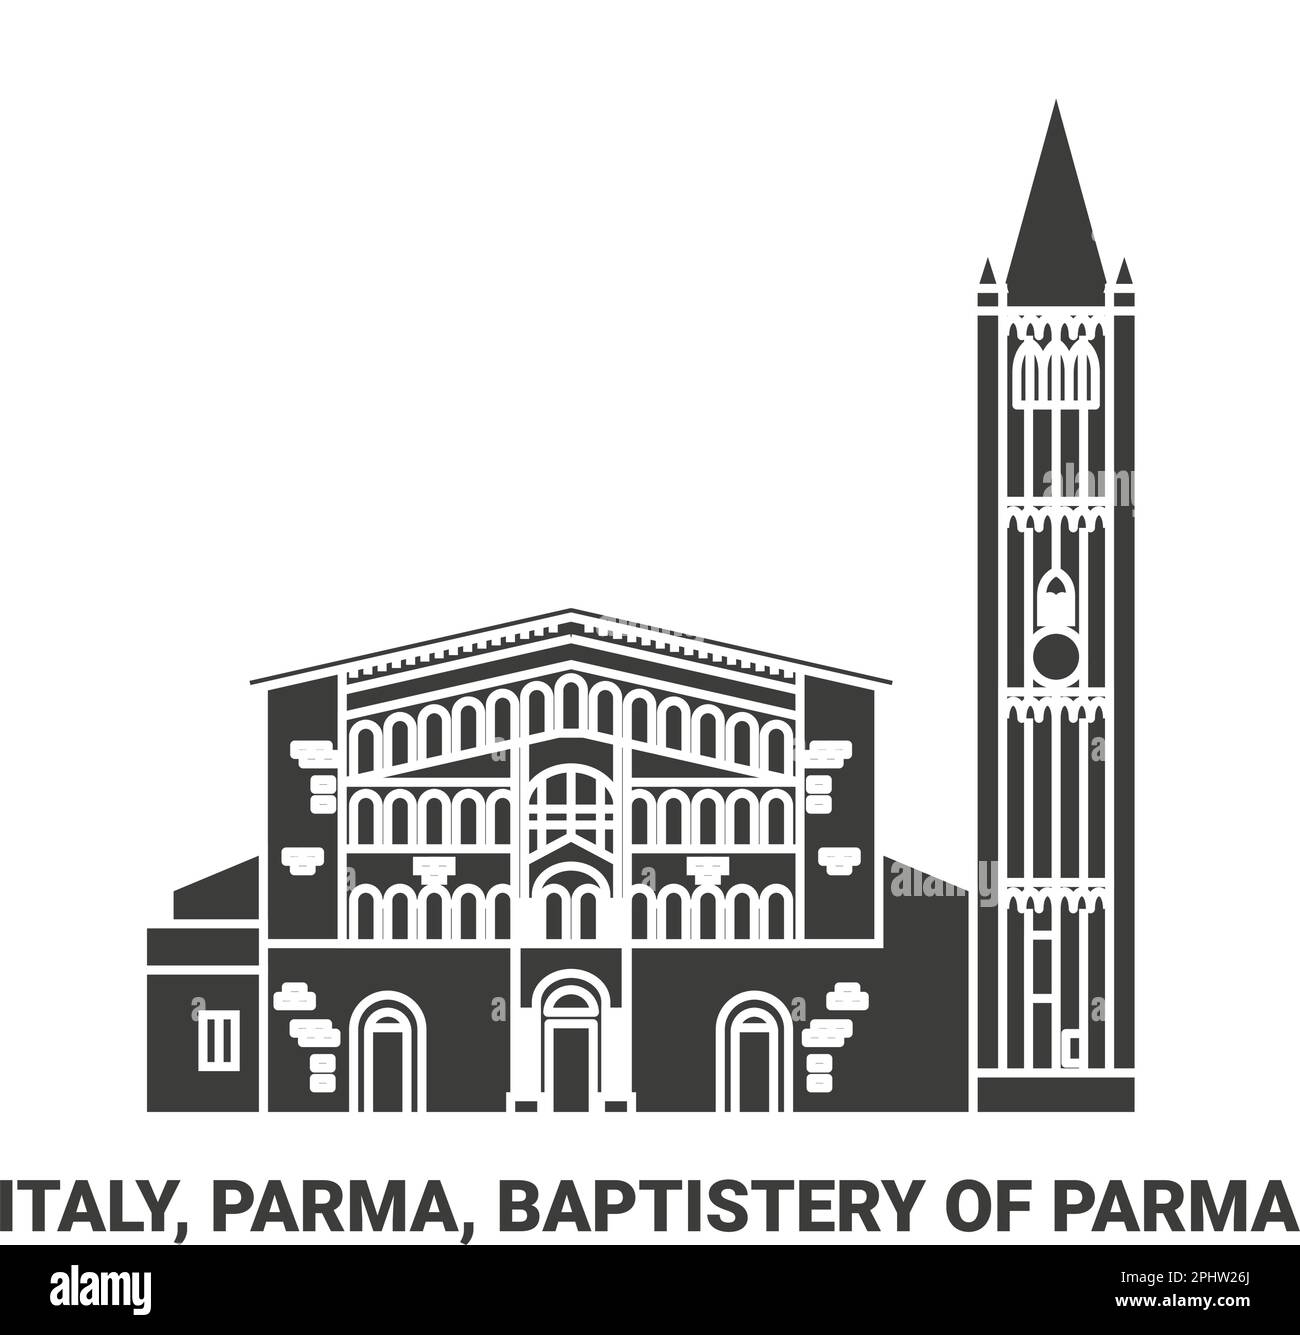 Italy, Parma, Baptistery Of Parma travel landmark vector illustration Stock Vector